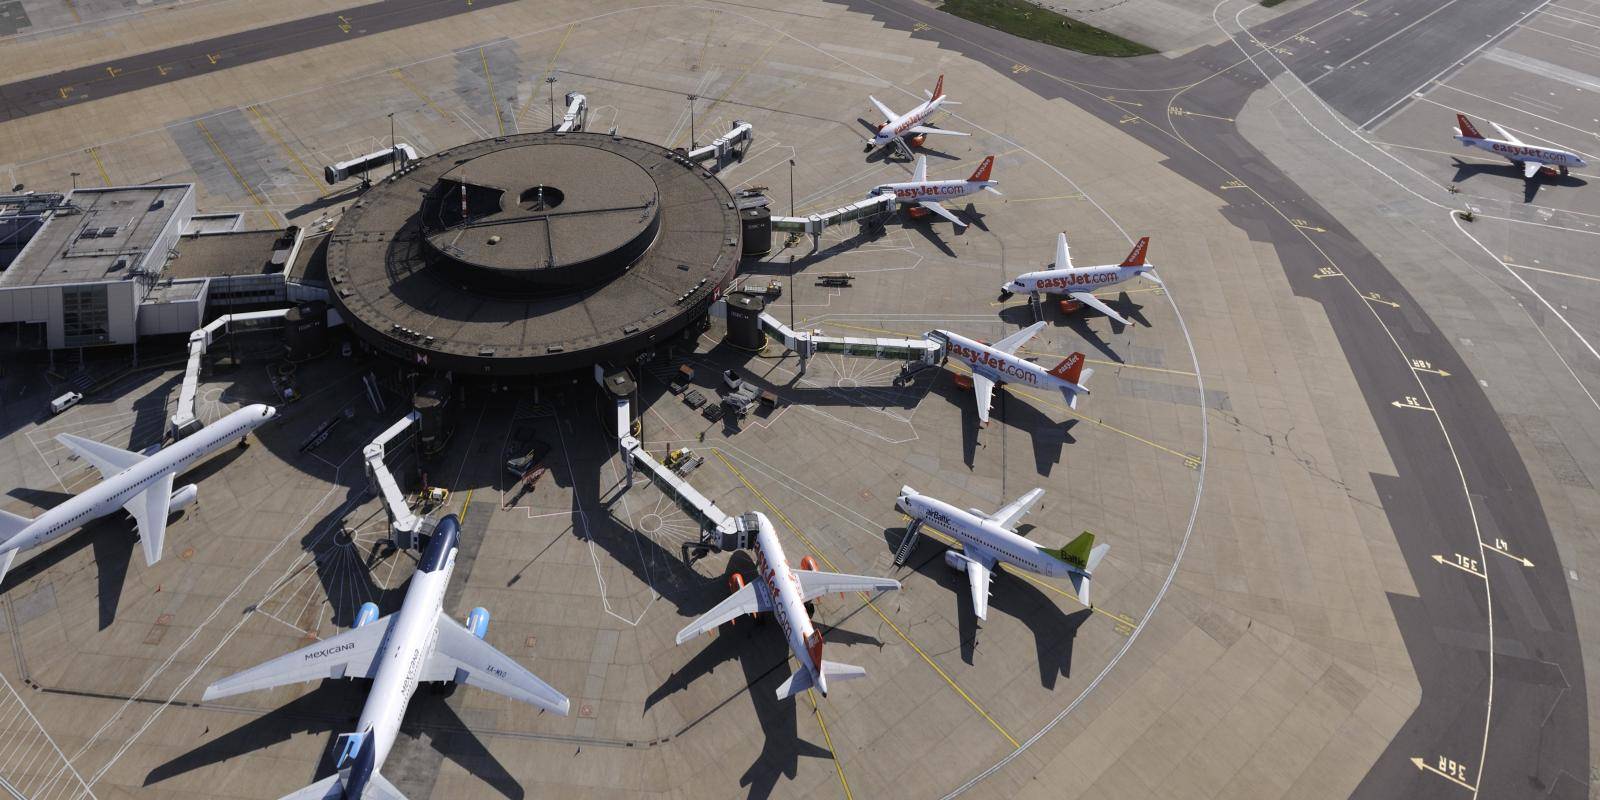 Aircraft stranded at London Gatwick airport